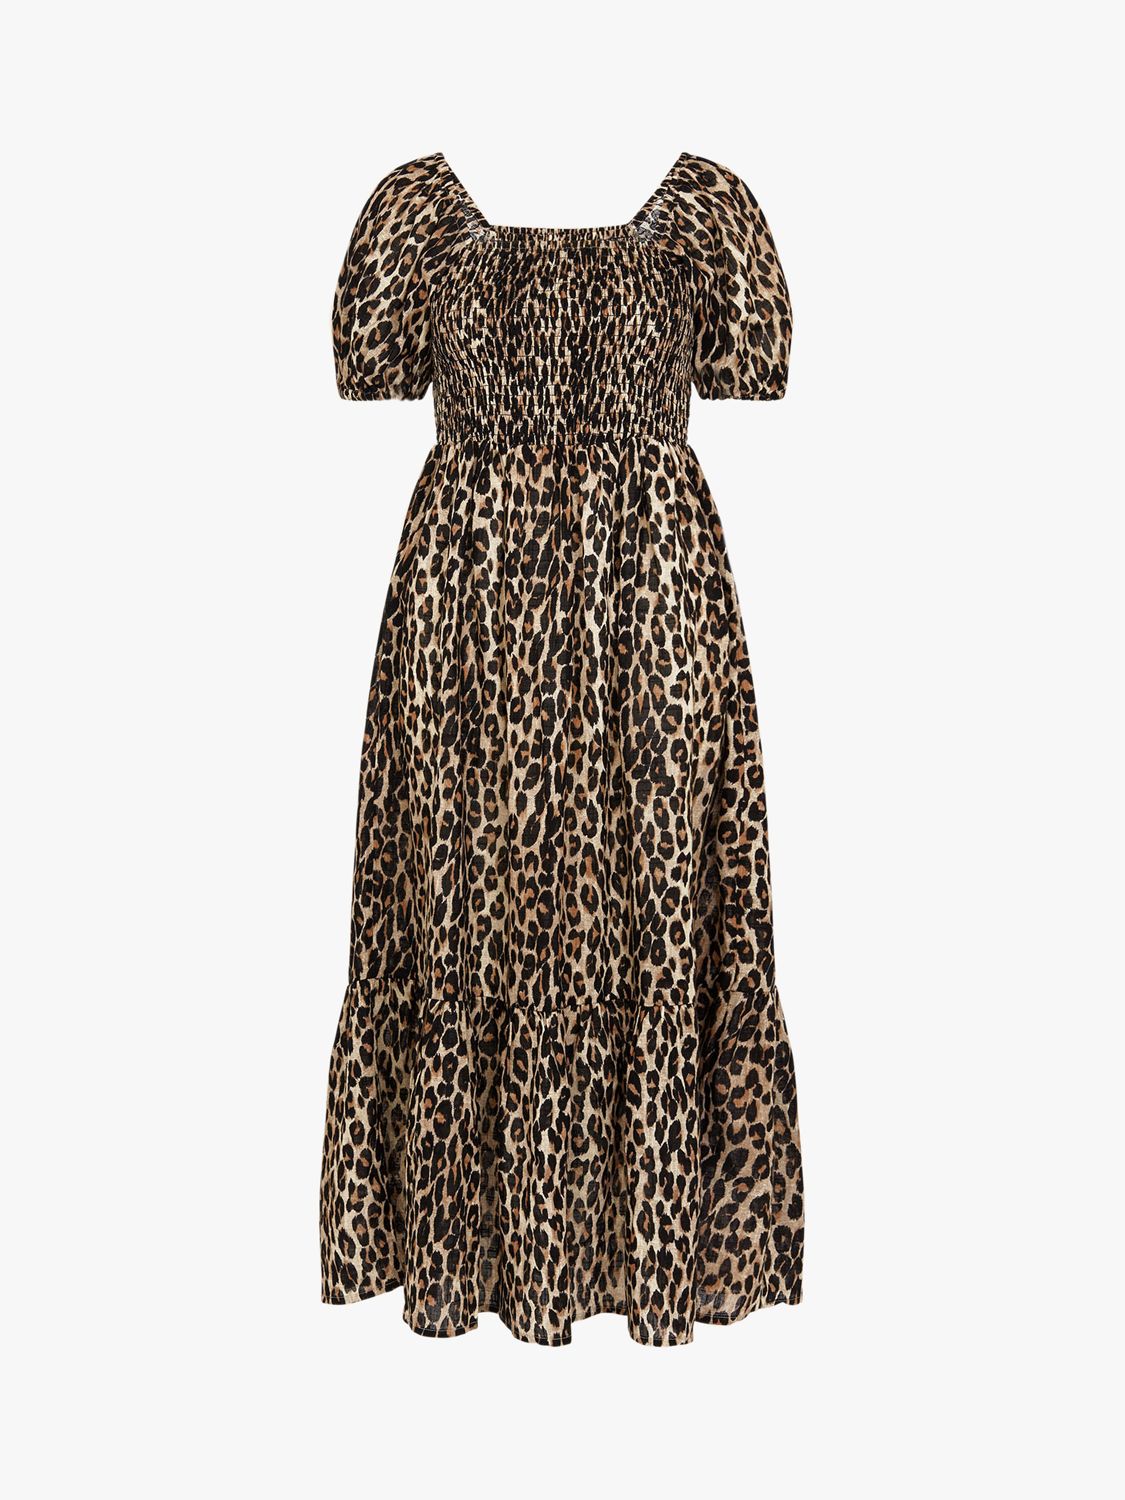 Accessorize Leopard Print Puff Sleeve Dress, Mid Brown, XS